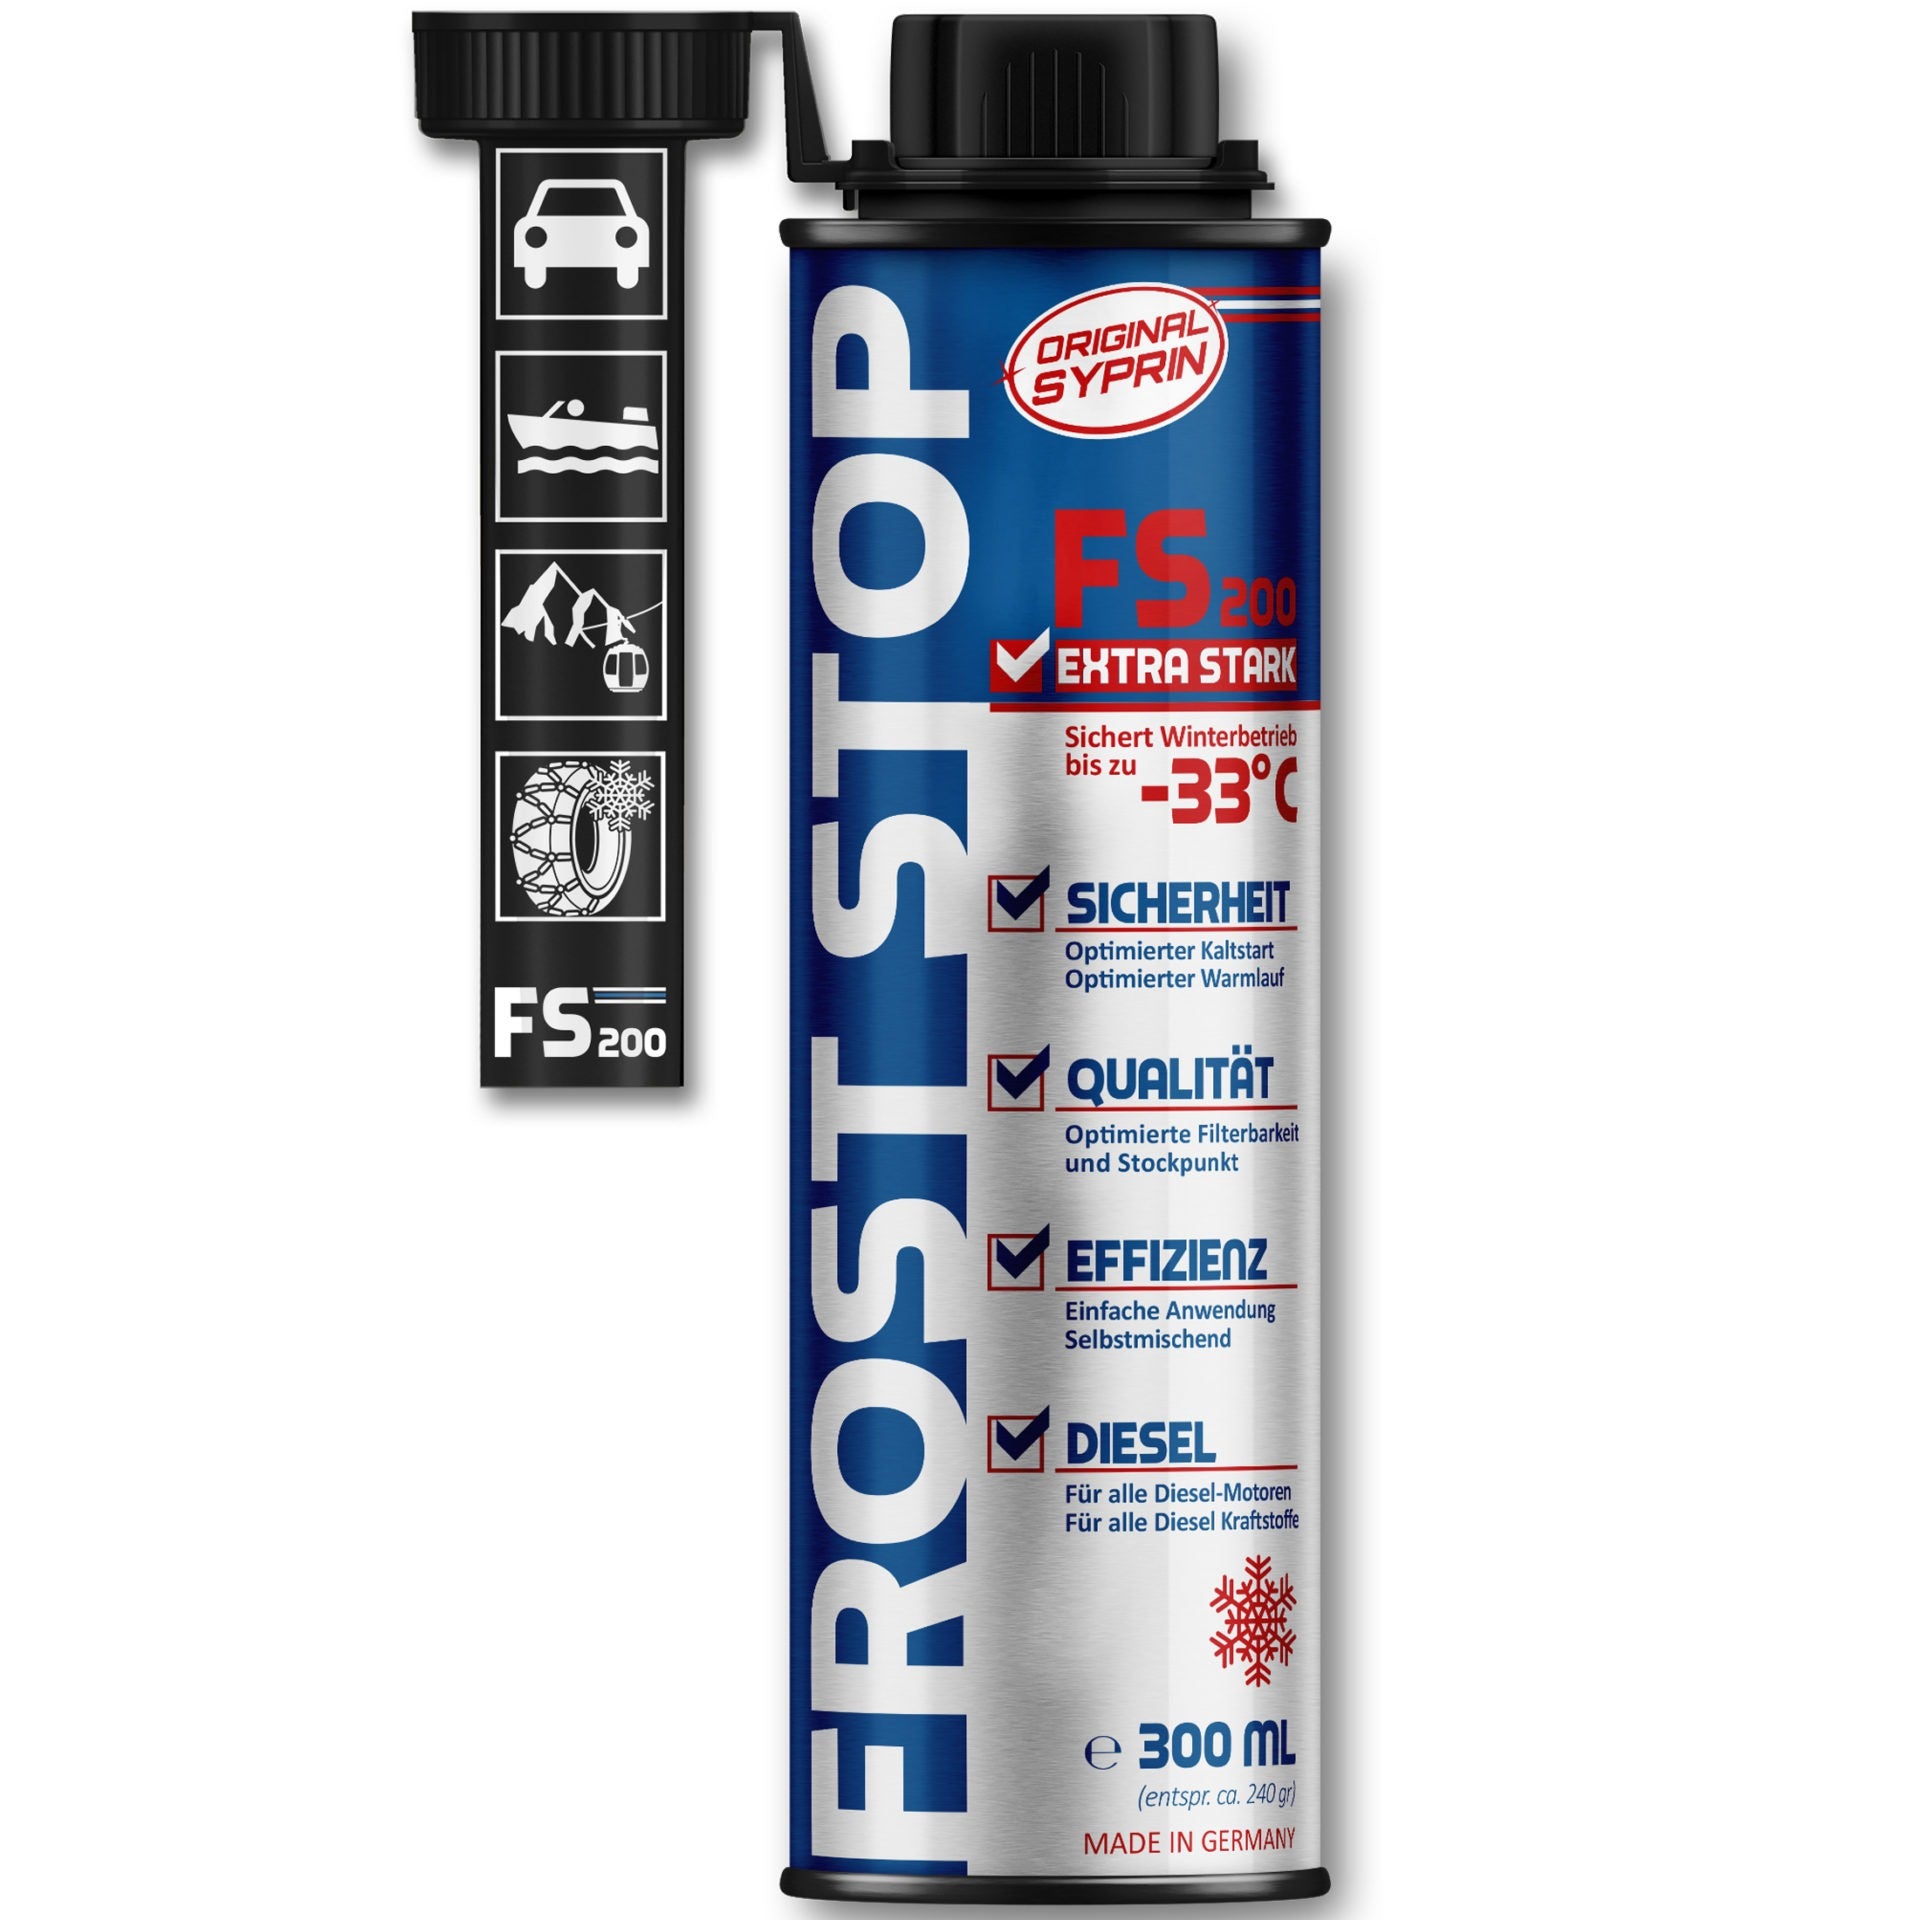 ORIGINAL SYPRIN Diesel Frost Stop - Diesel antifreeze down to -33°C – syprin